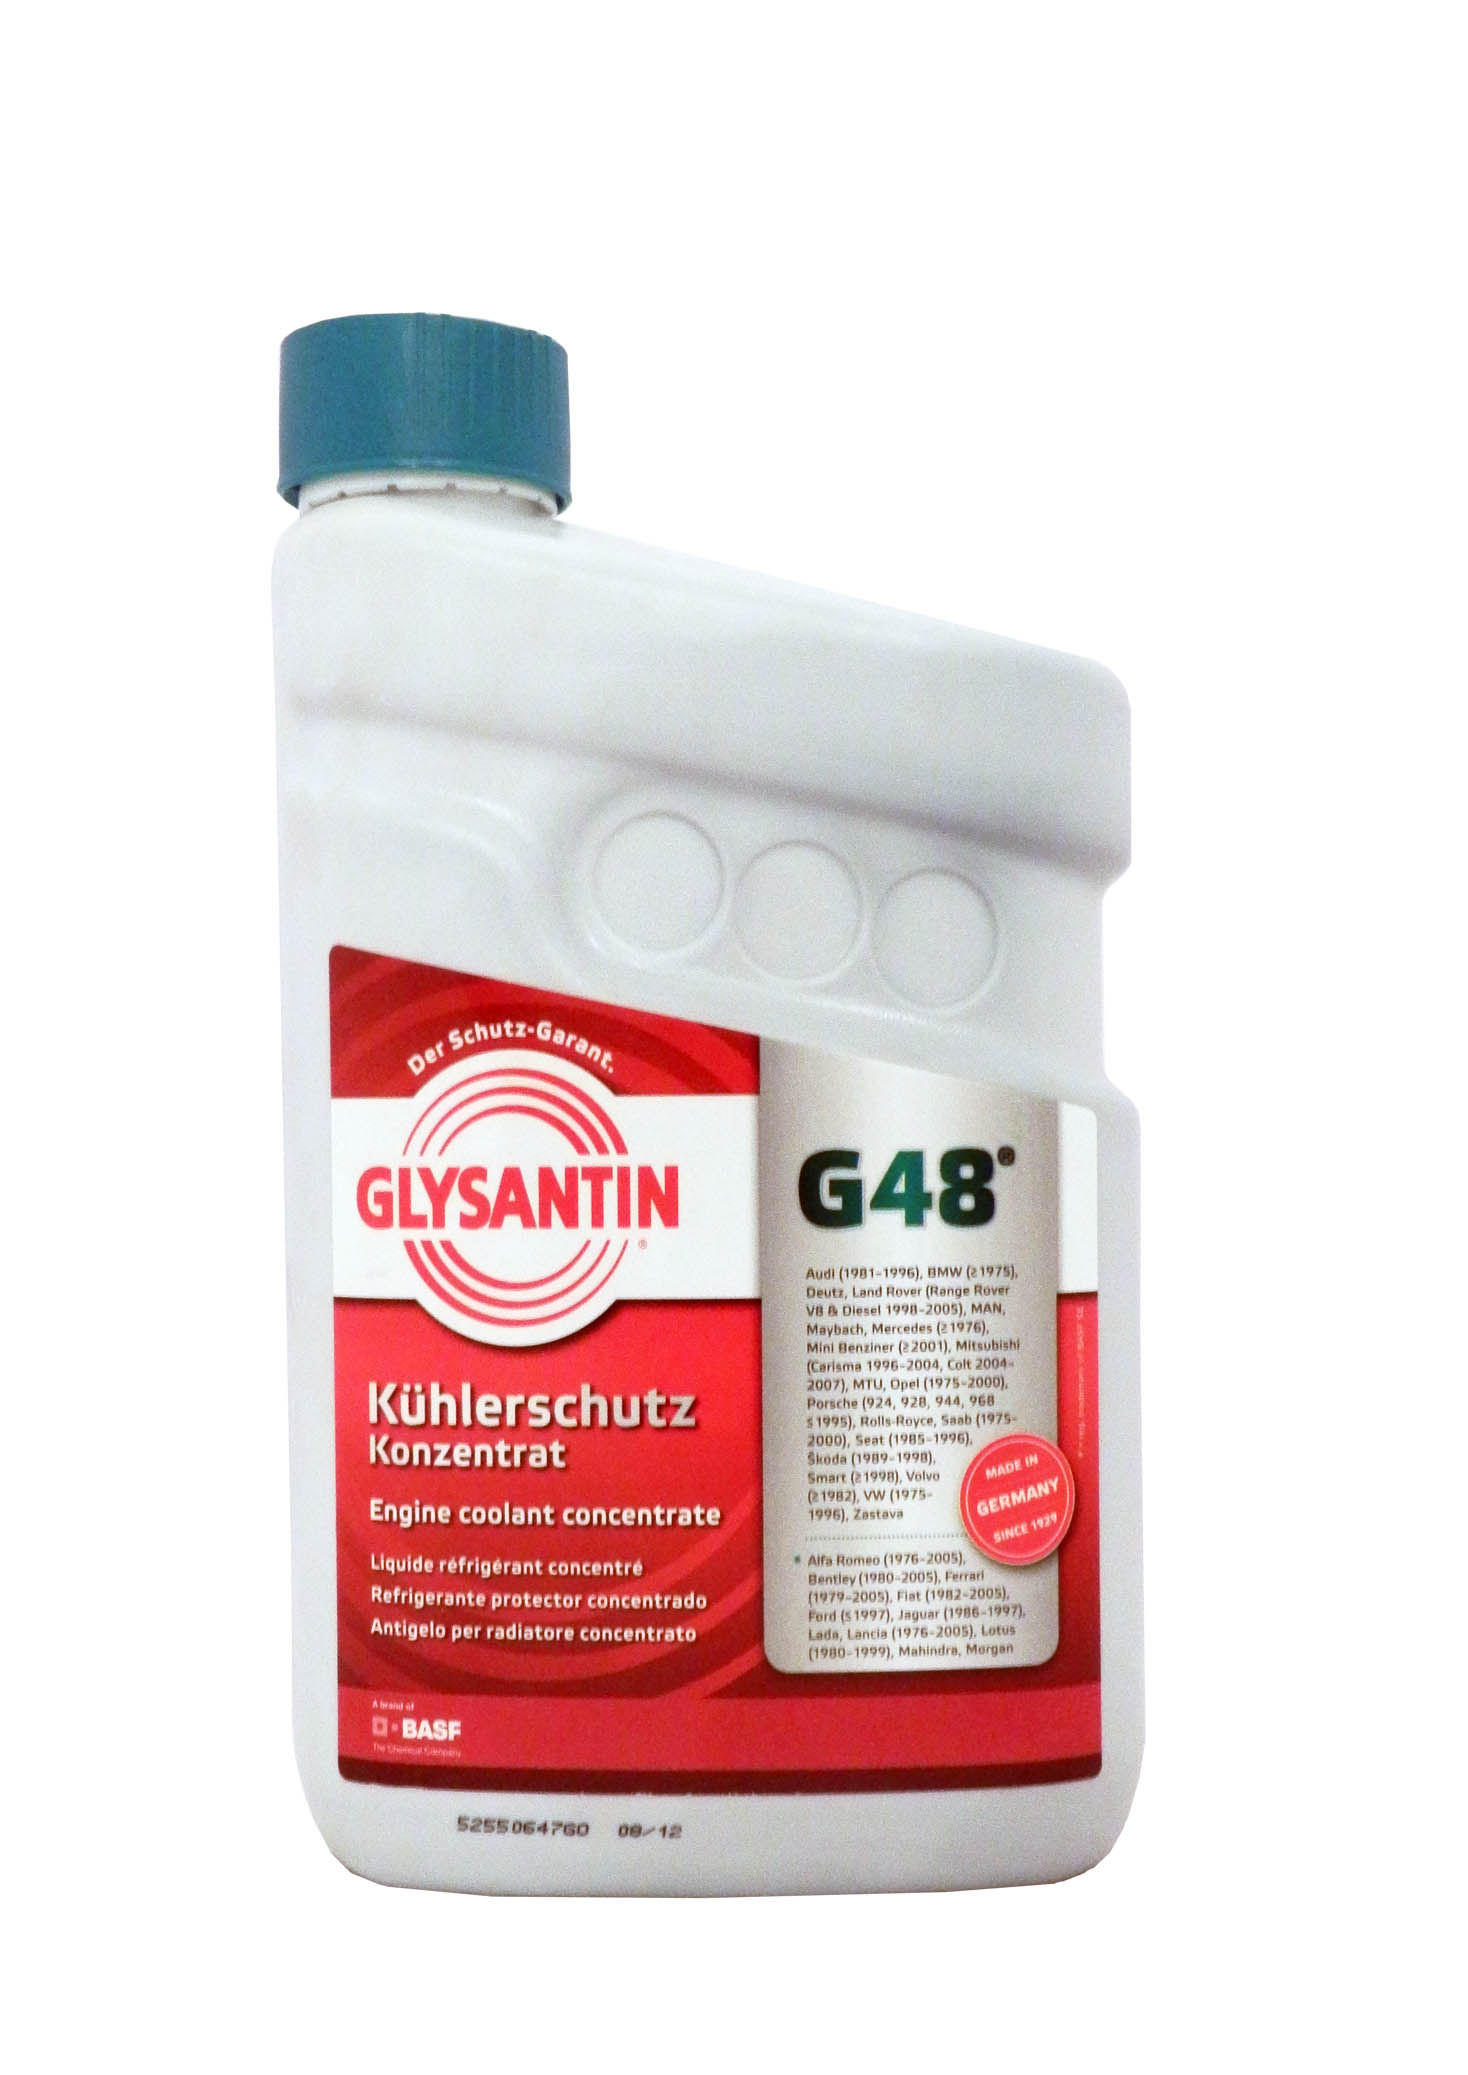 Basf glysantin g30. BASF g48 антифриз. Глисантин g48. Glysantin g48 концентрат. BASF Glysantin g48.